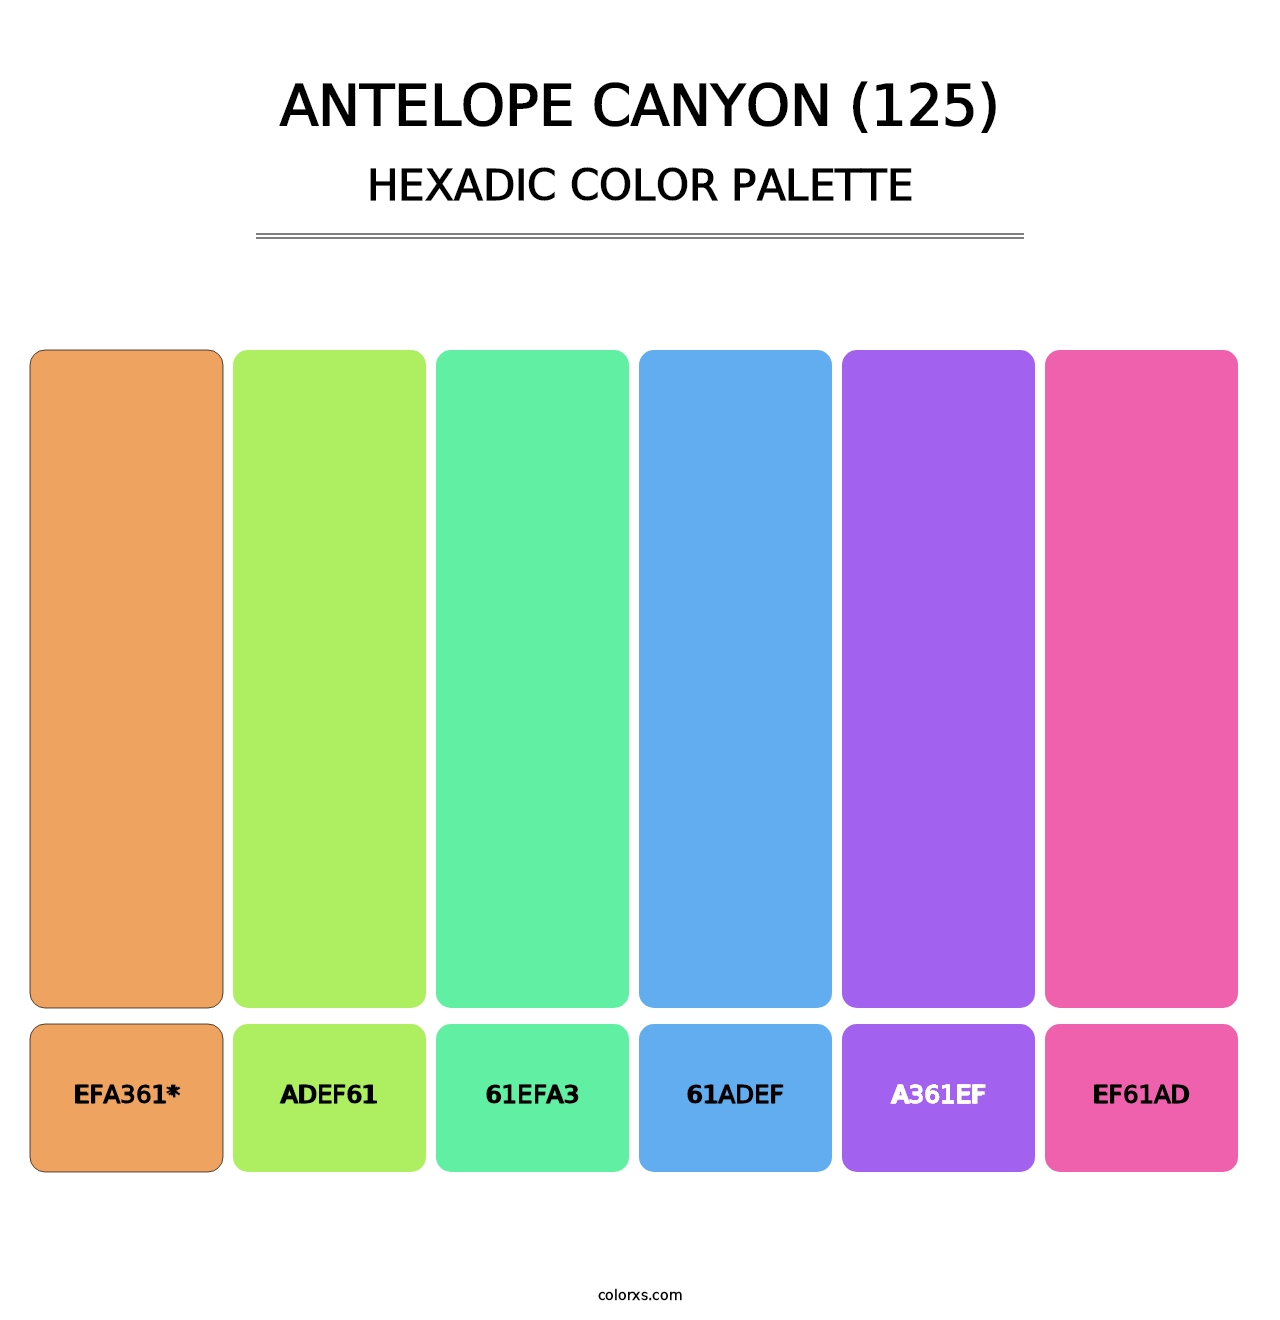 Antelope Canyon (125) - Hexadic Color Palette